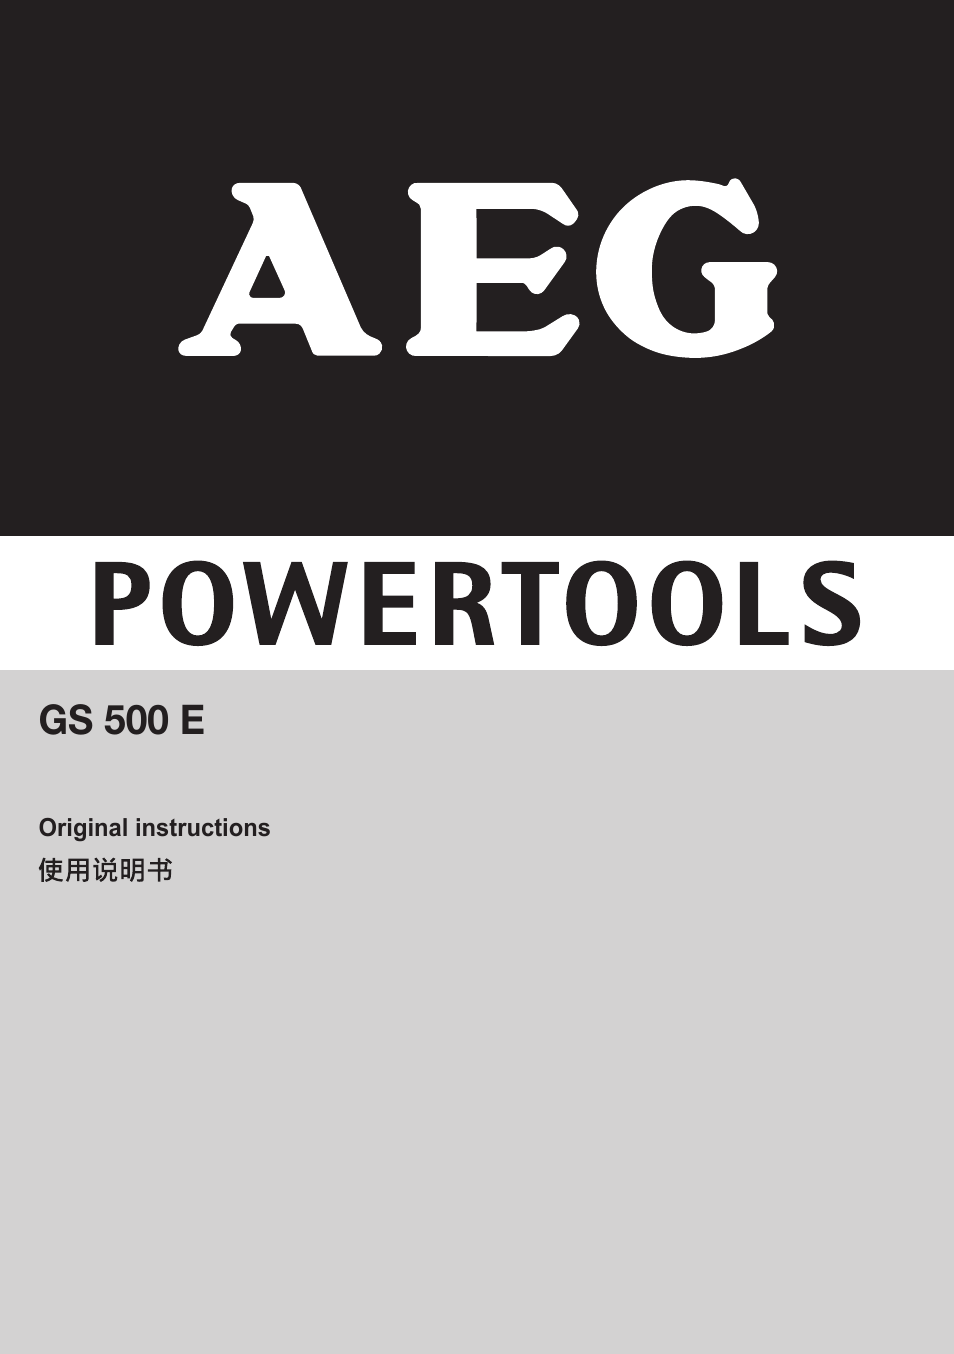 GS 500 E